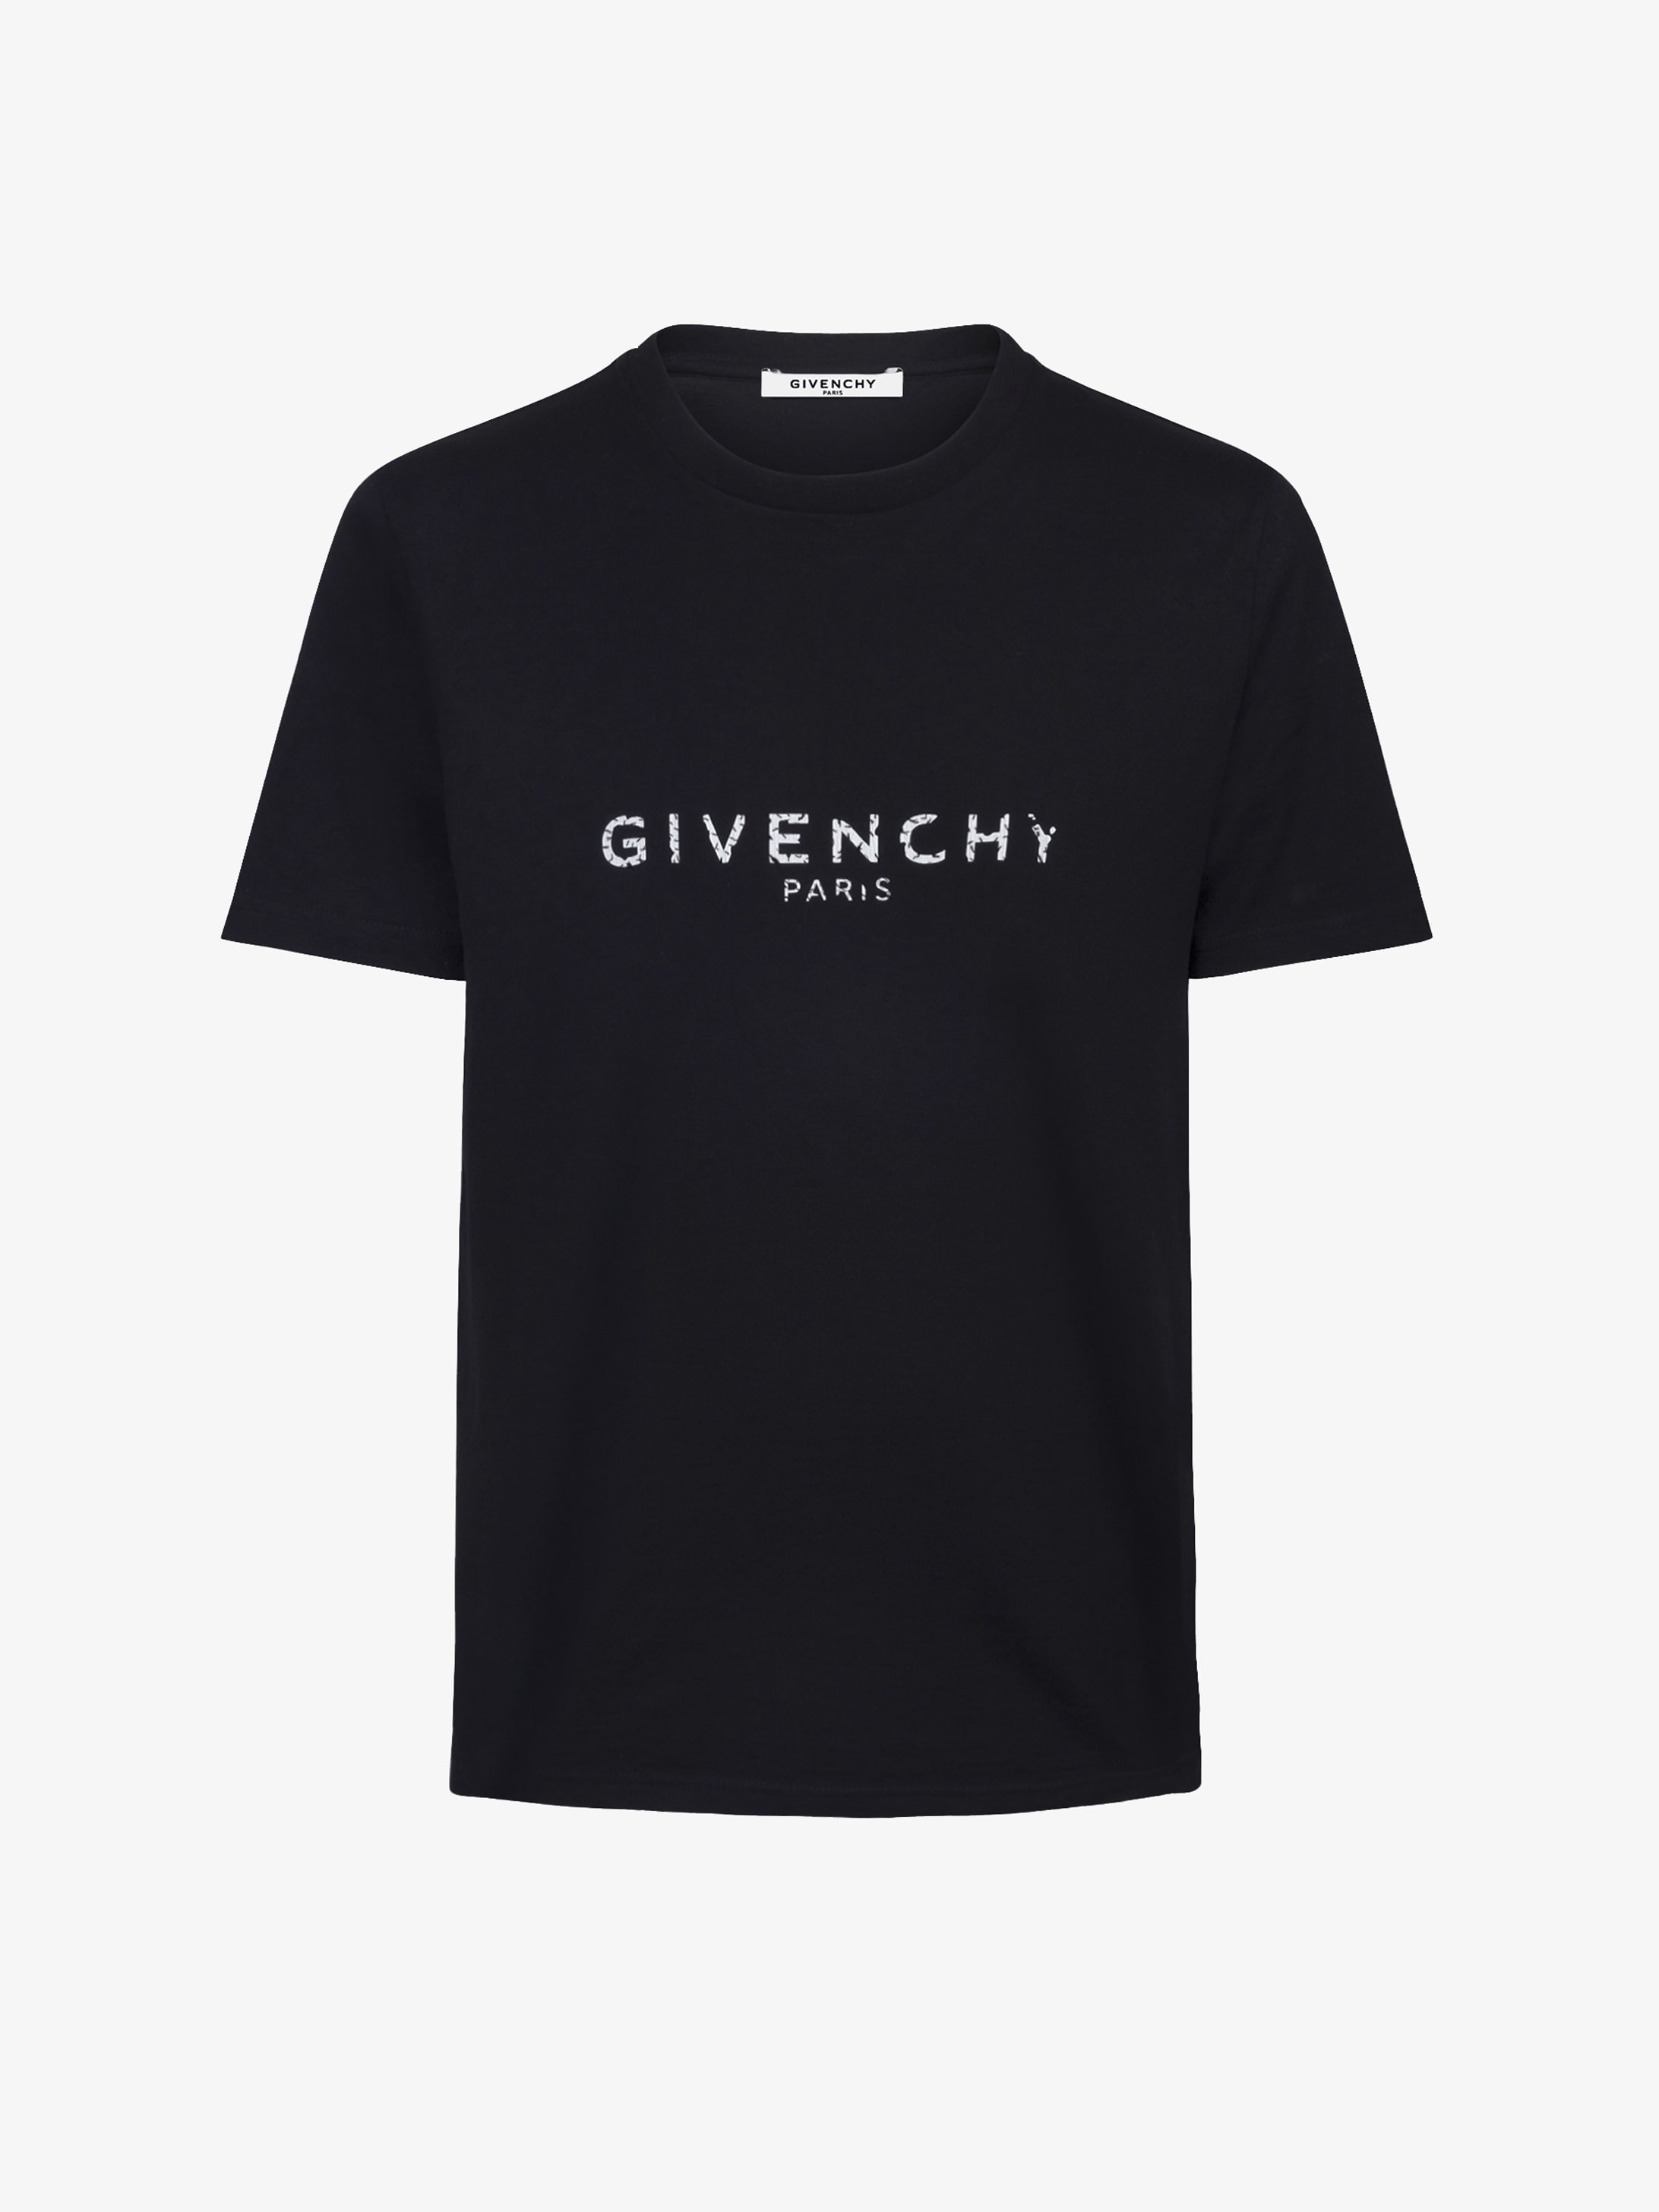 GIVENCHY PARIS oversized t-shirt 